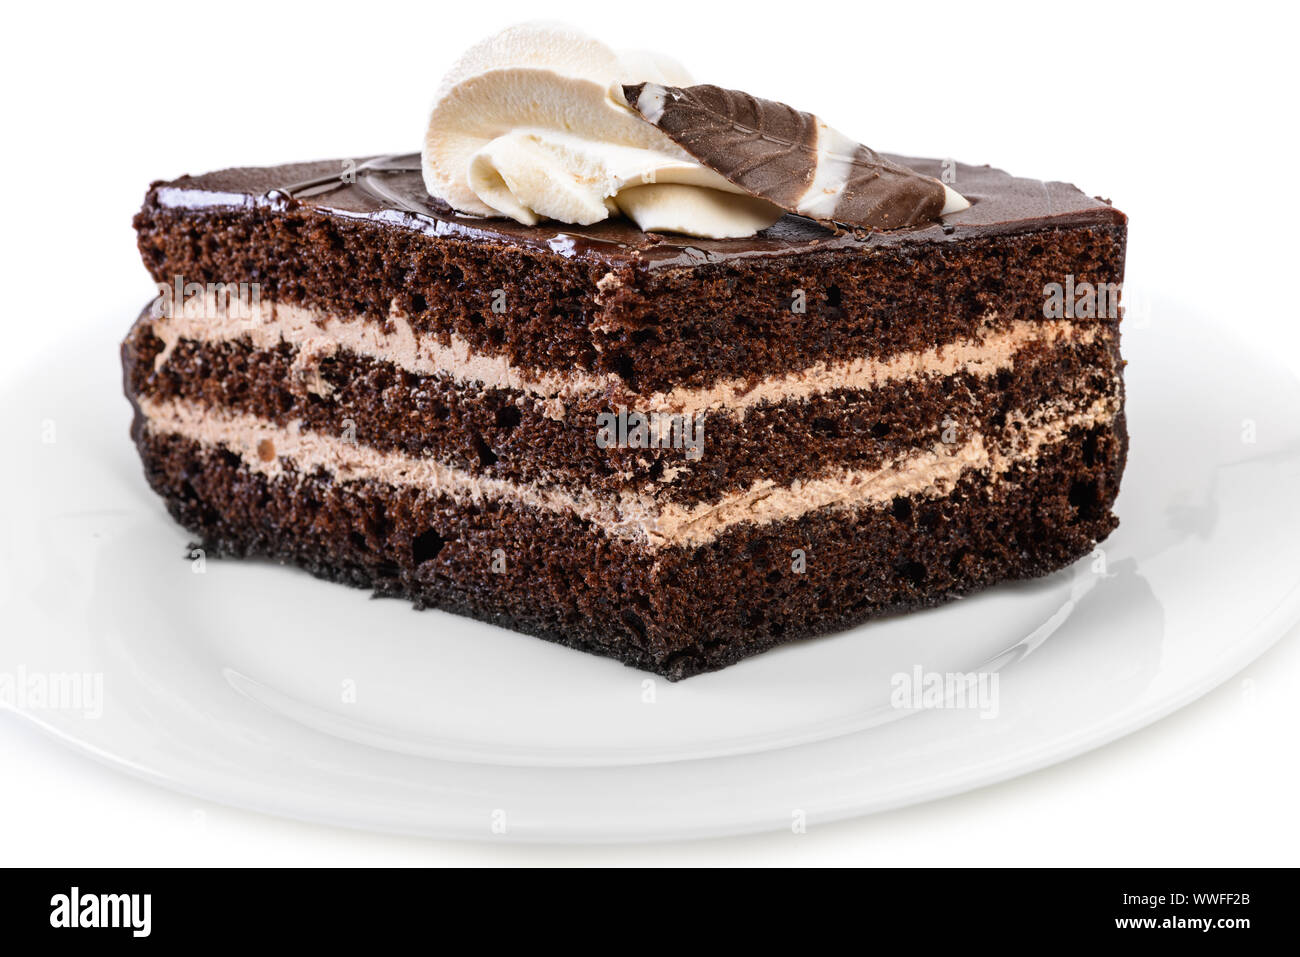 Chocolate cake with chocolate ornate and cream on plate Stock Photo